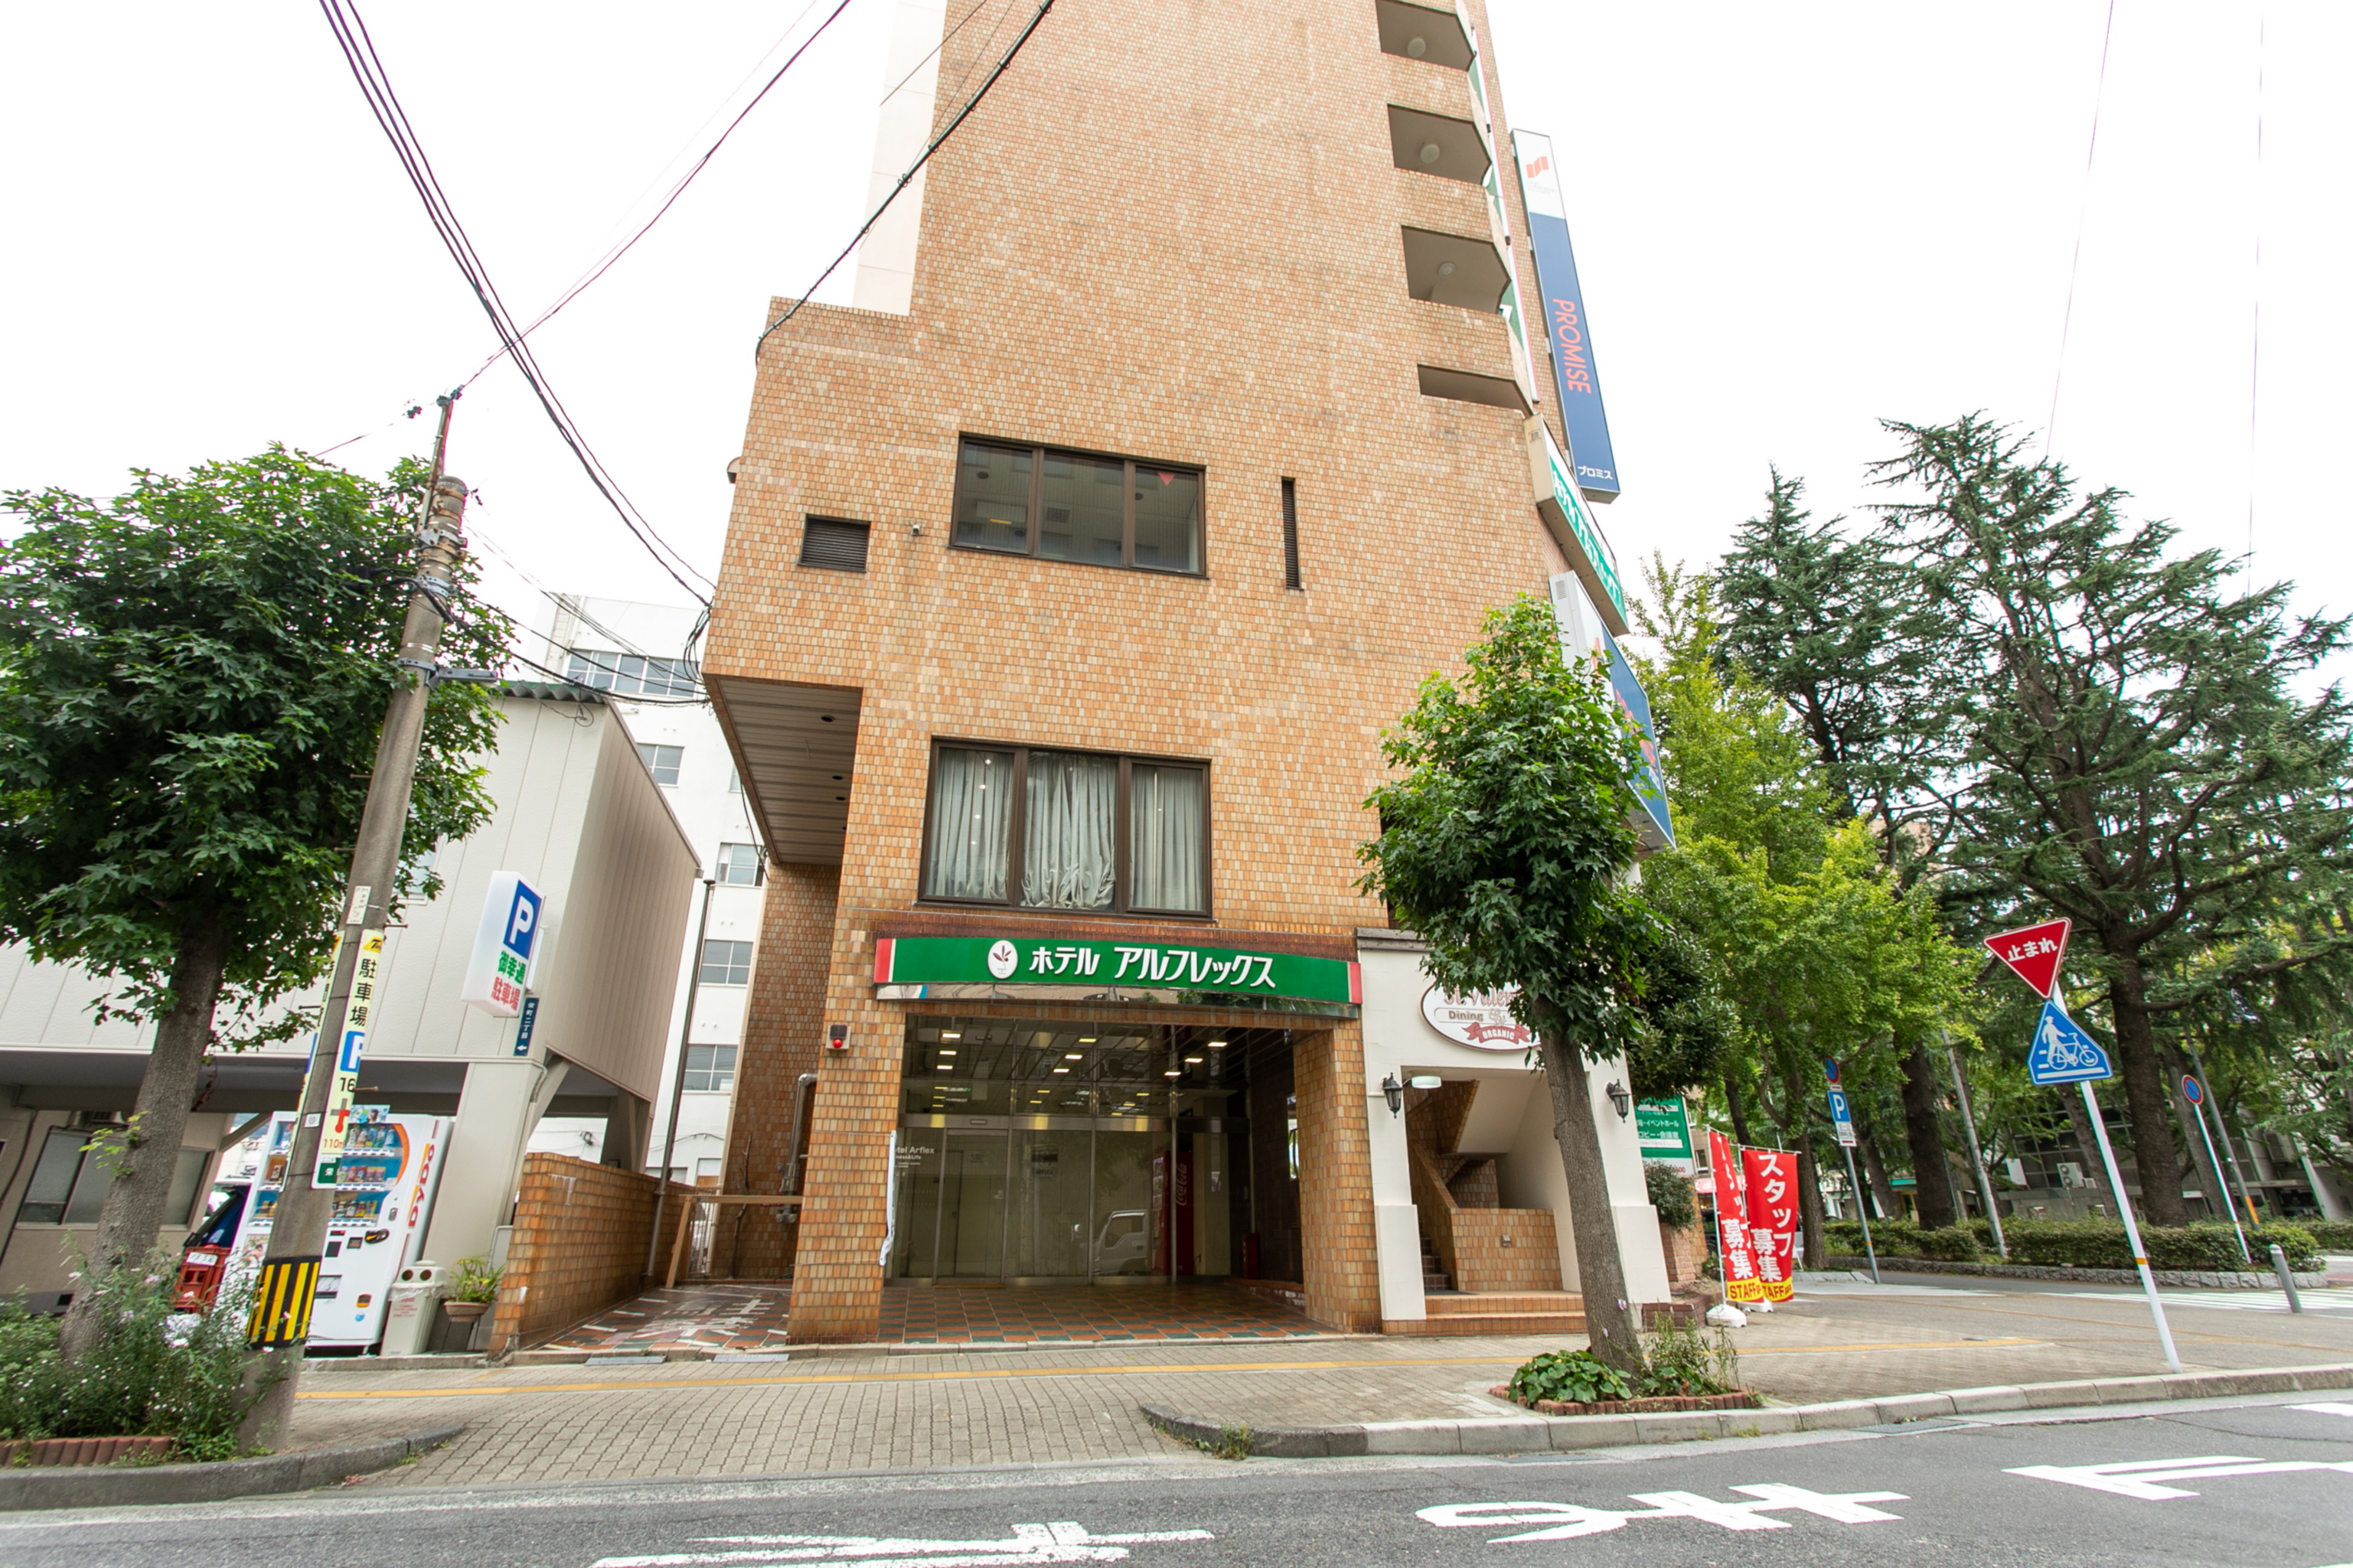 Tabist Hotel Arflex Tokuyama Station